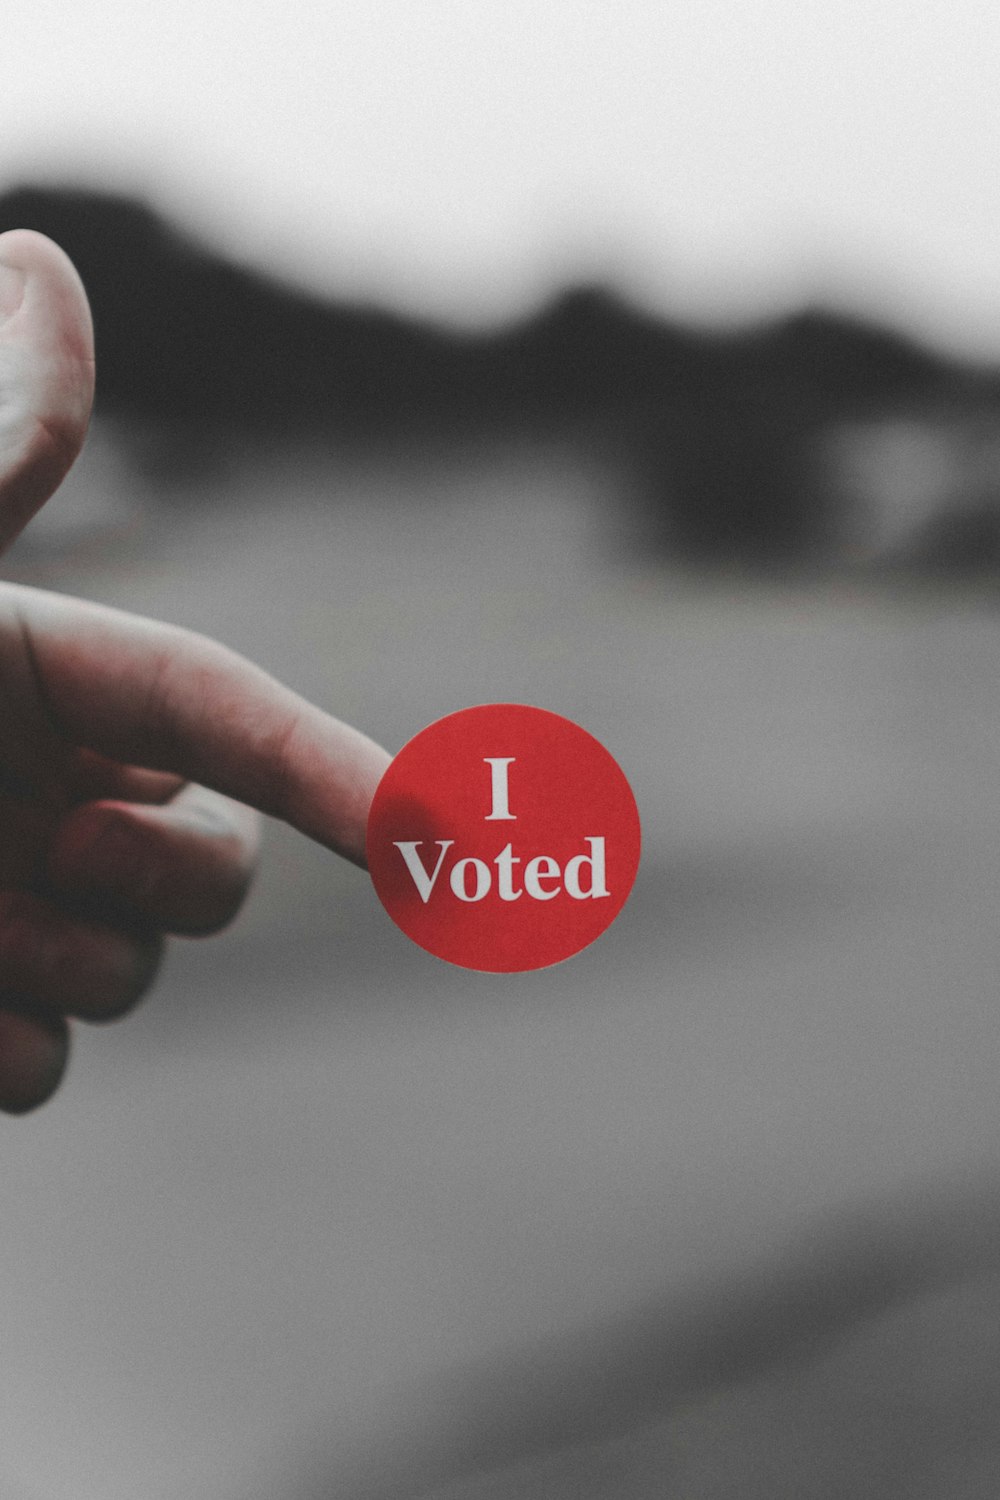 「I vote」と書かれた赤いボタンを持つ手